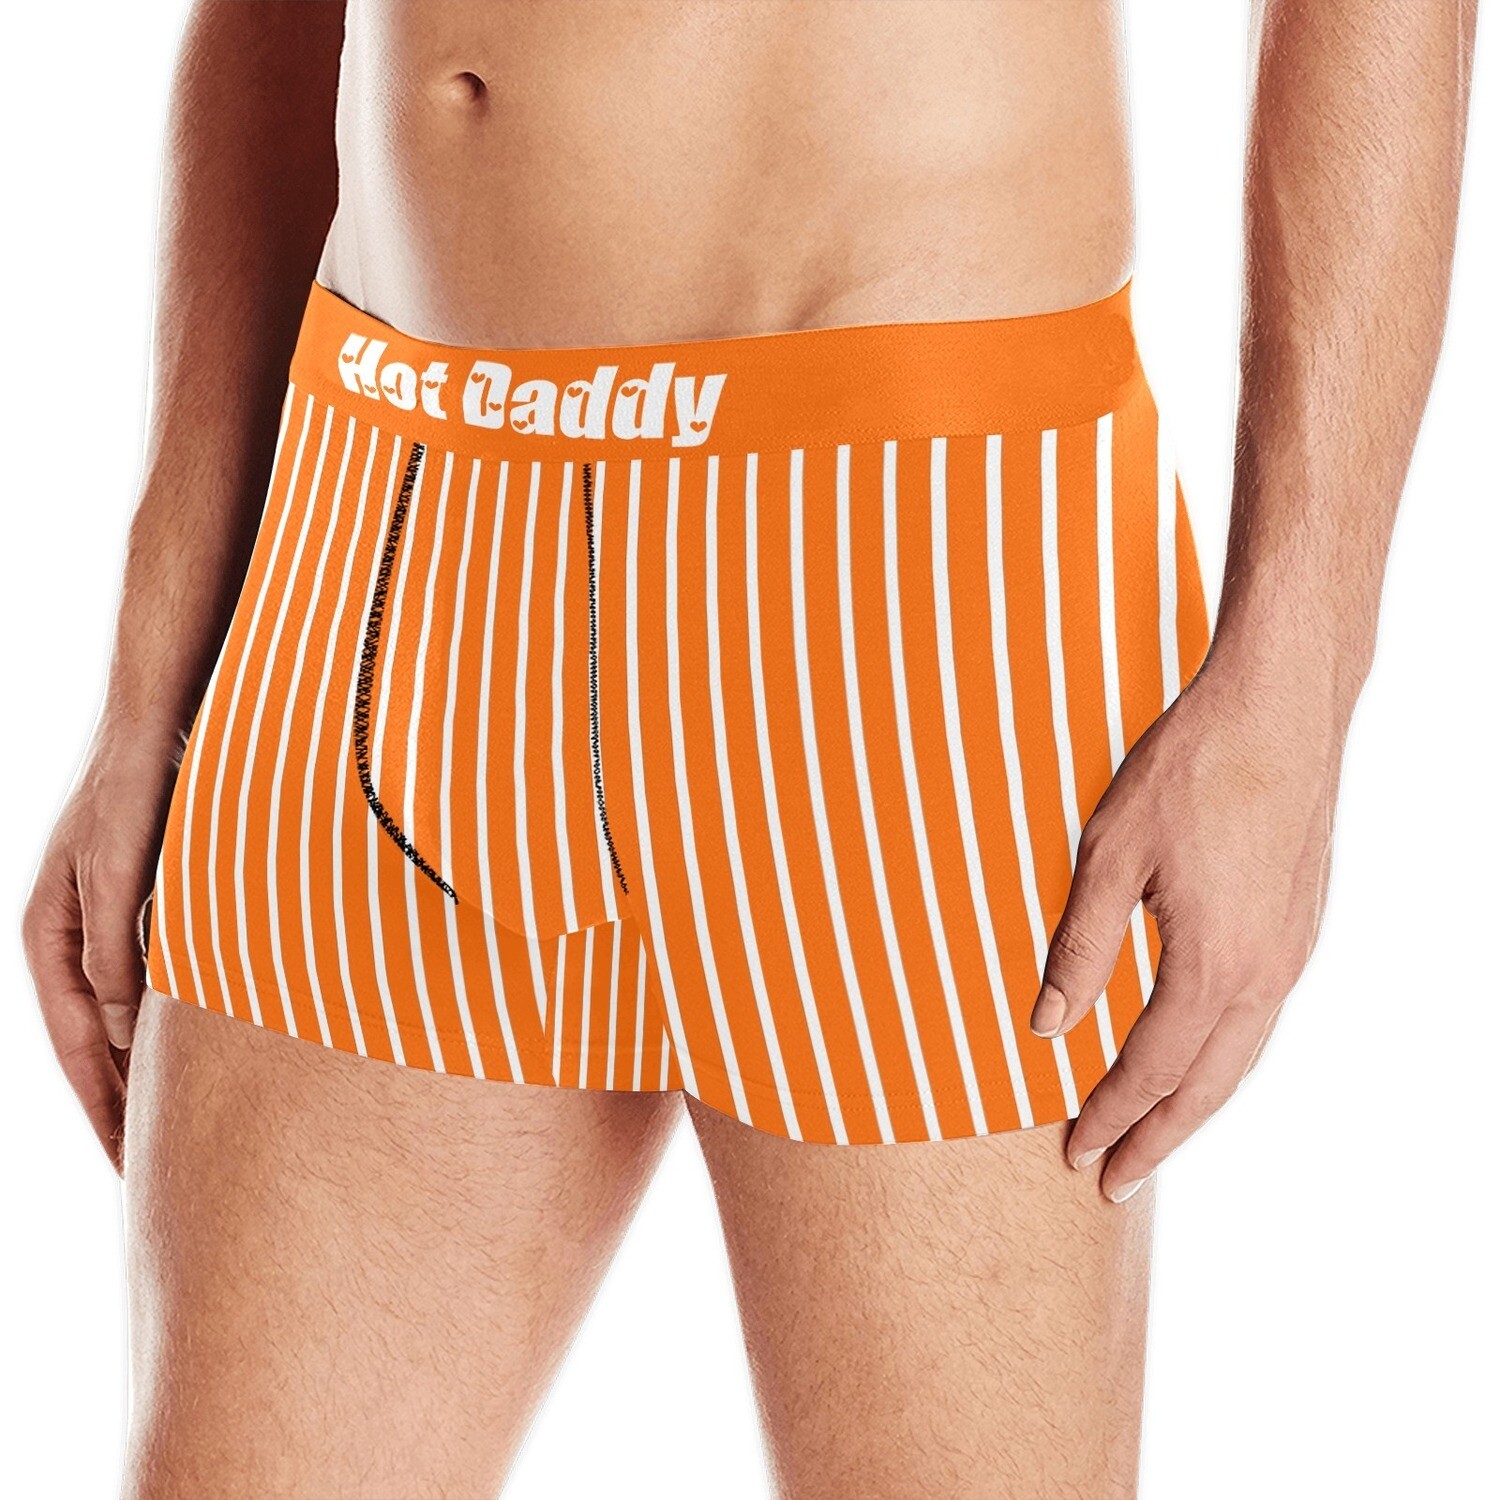 🤴🏽Hot Daddy boxer briefs. Custom Boxers for men. New Dad gift. Personalized underwear. Custom underwear. Father's day gift. Anniversary gift. Orange